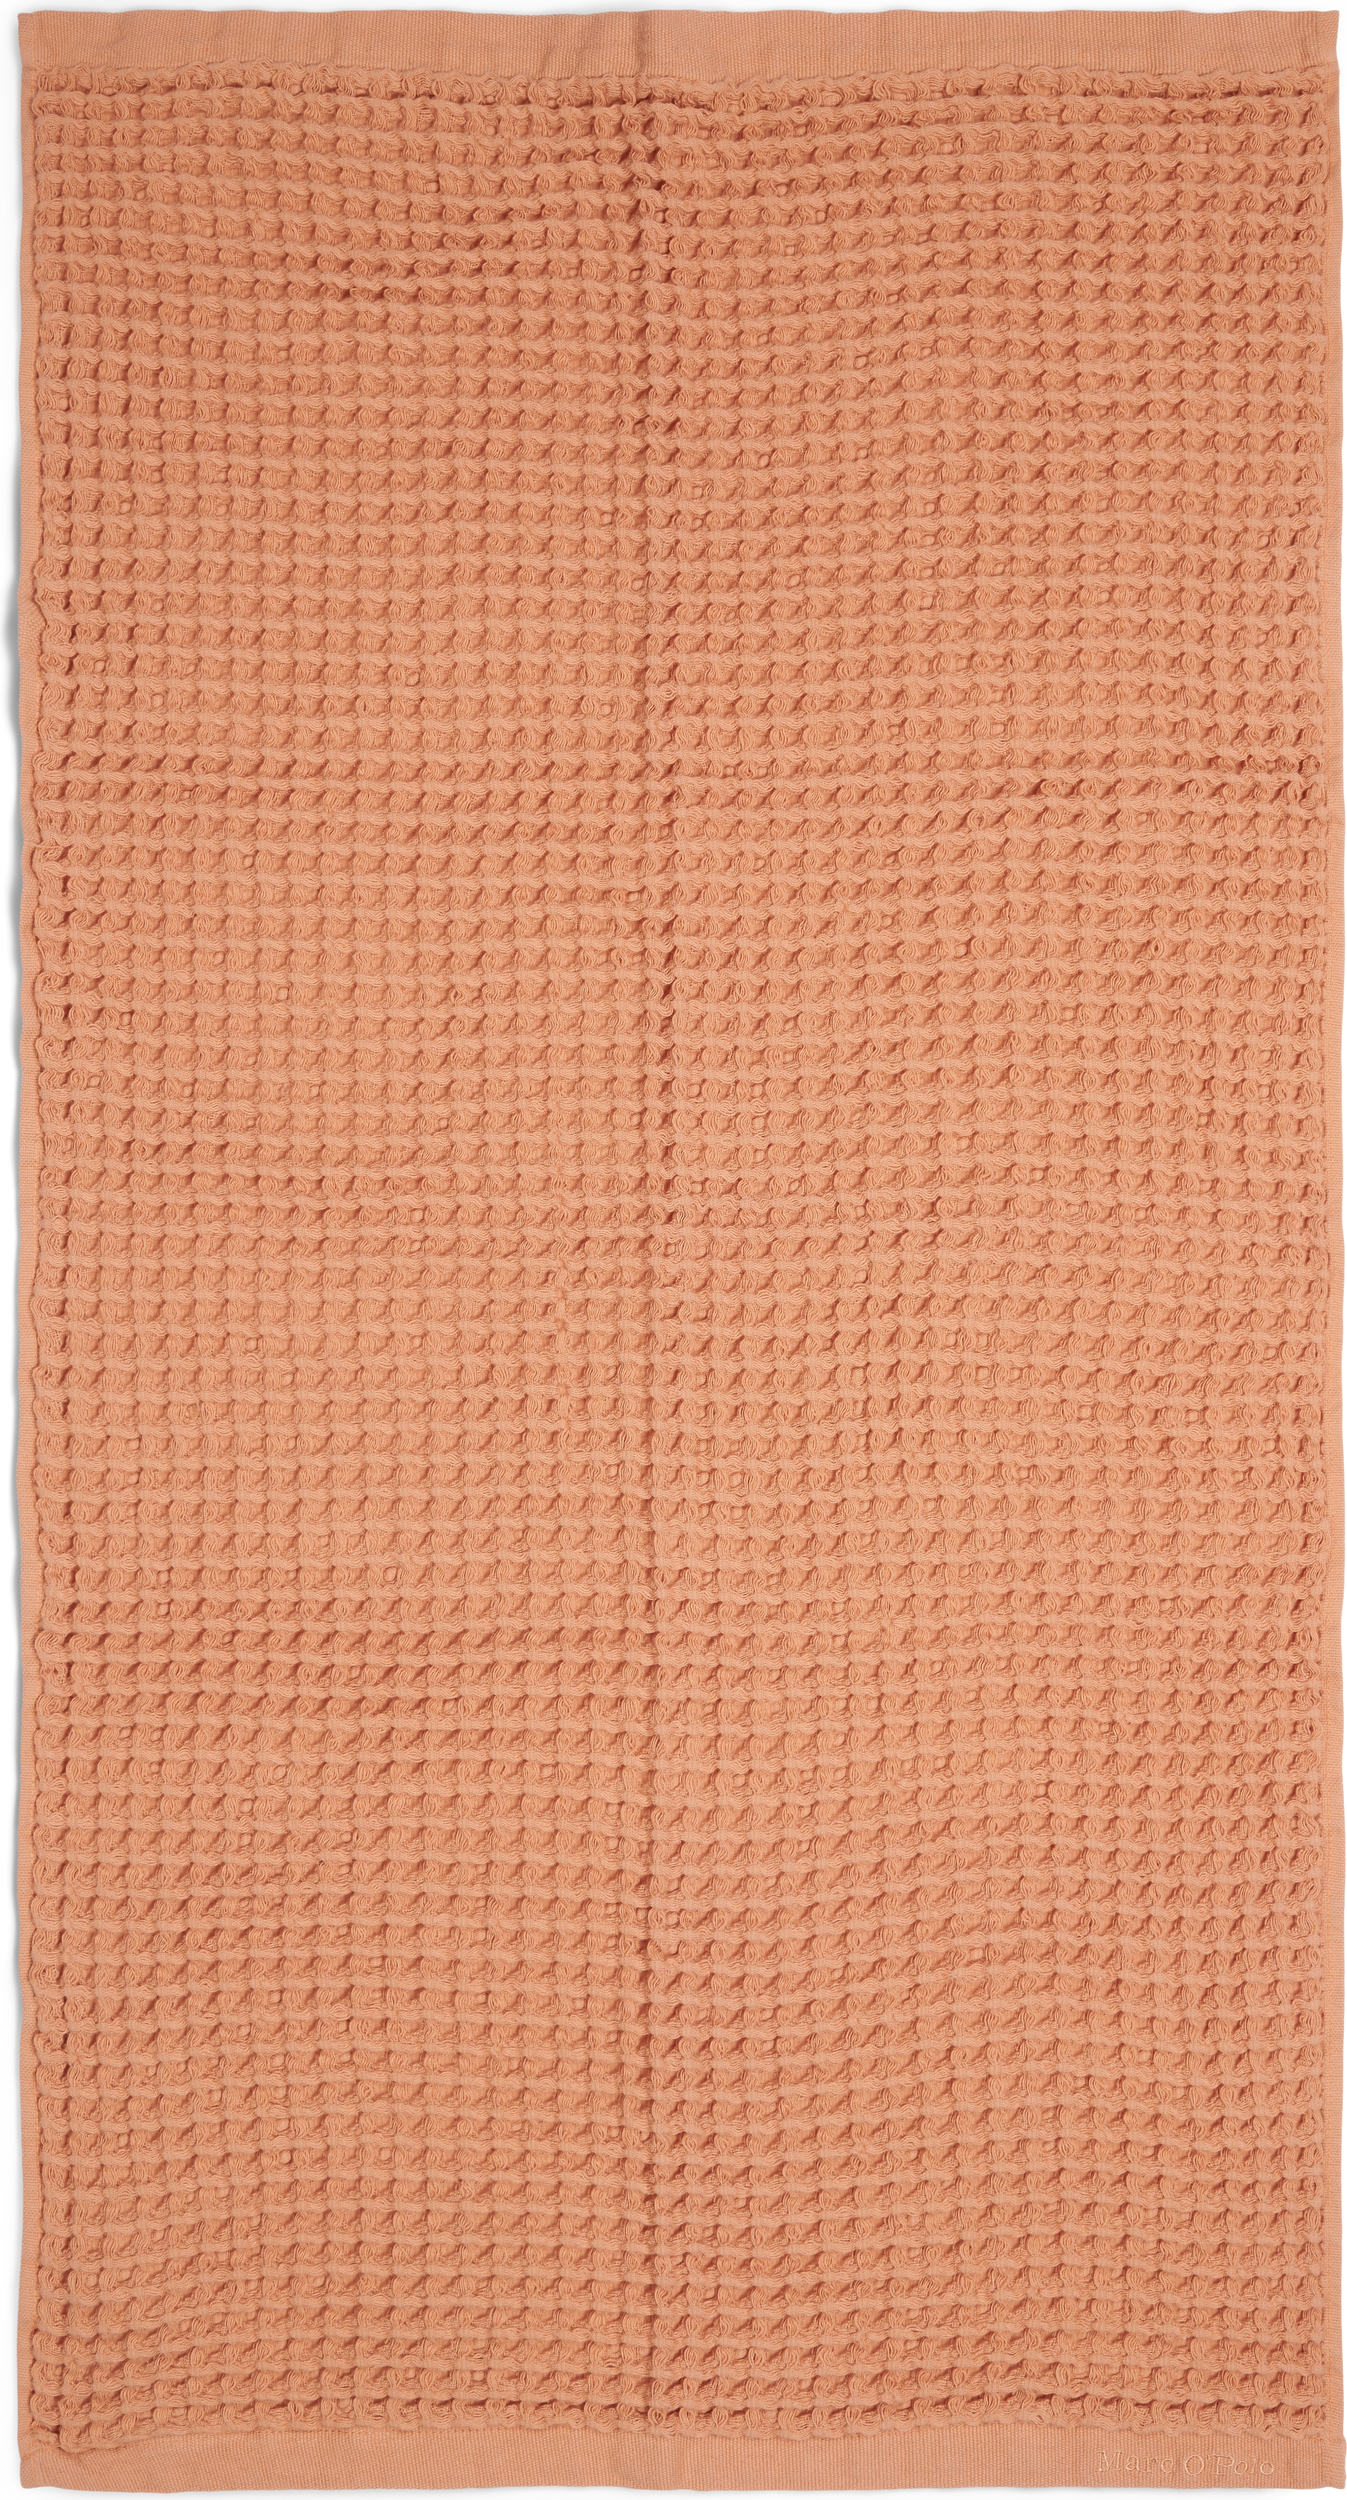 Mova Towel 50 x 100 cm - Marc O'Polo 739008-202-001